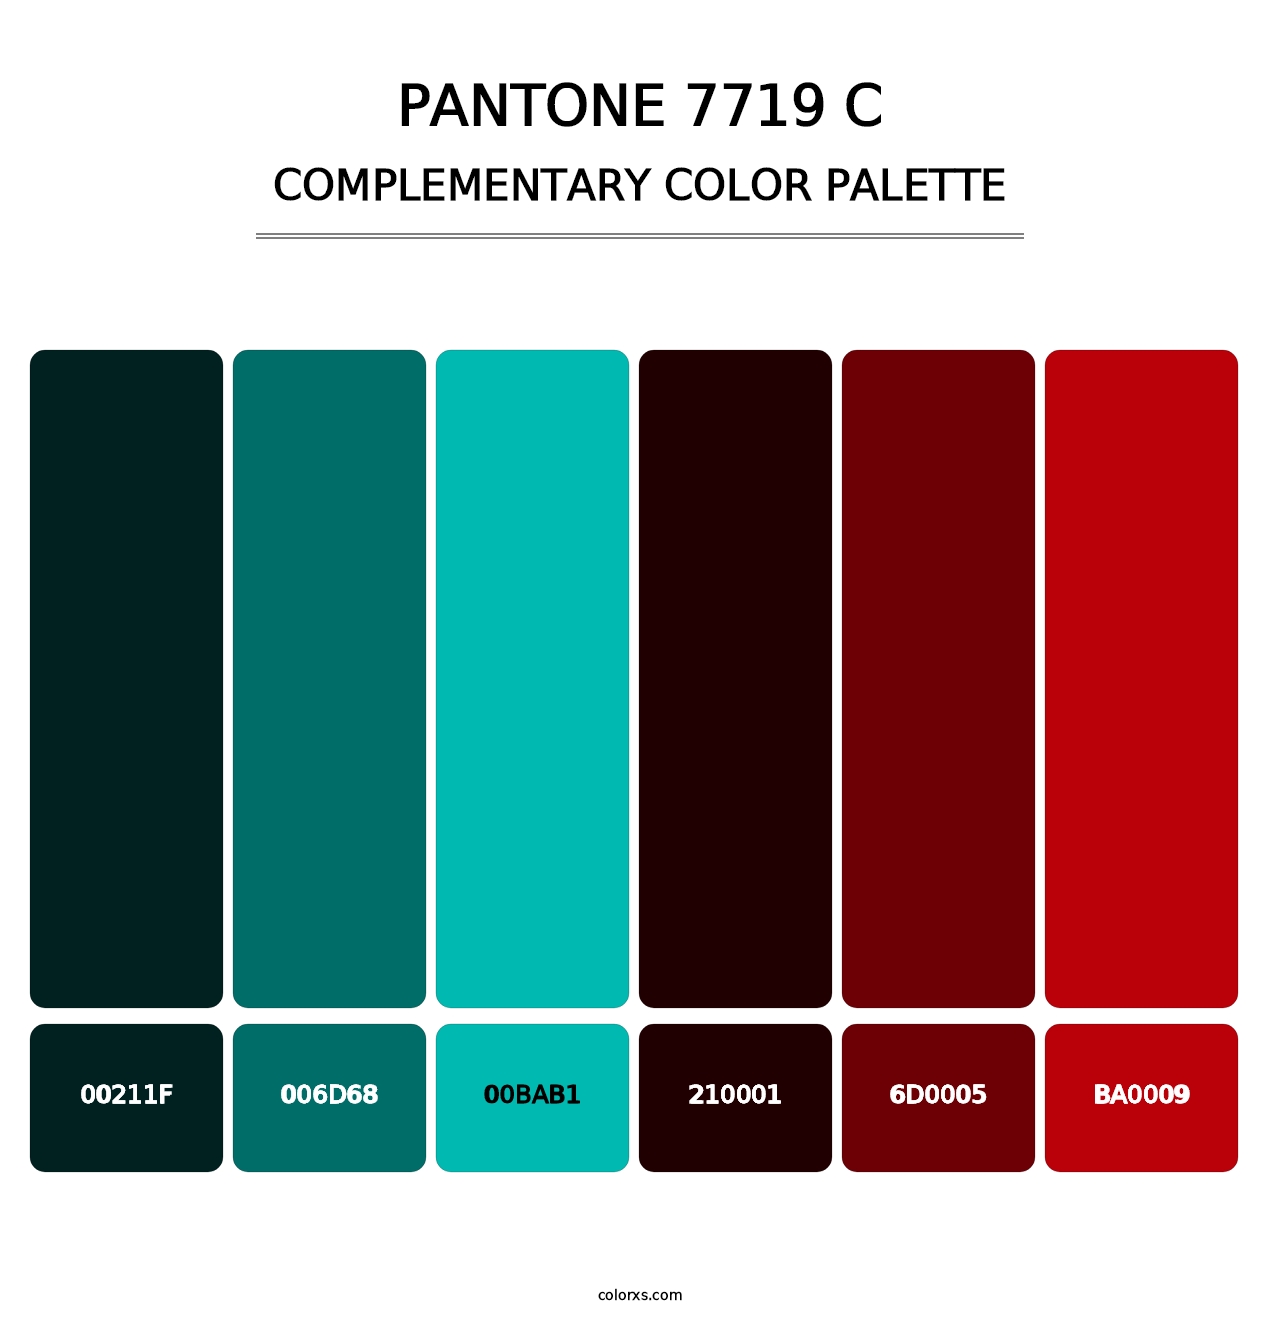 PANTONE 7719 C - Complementary Color Palette